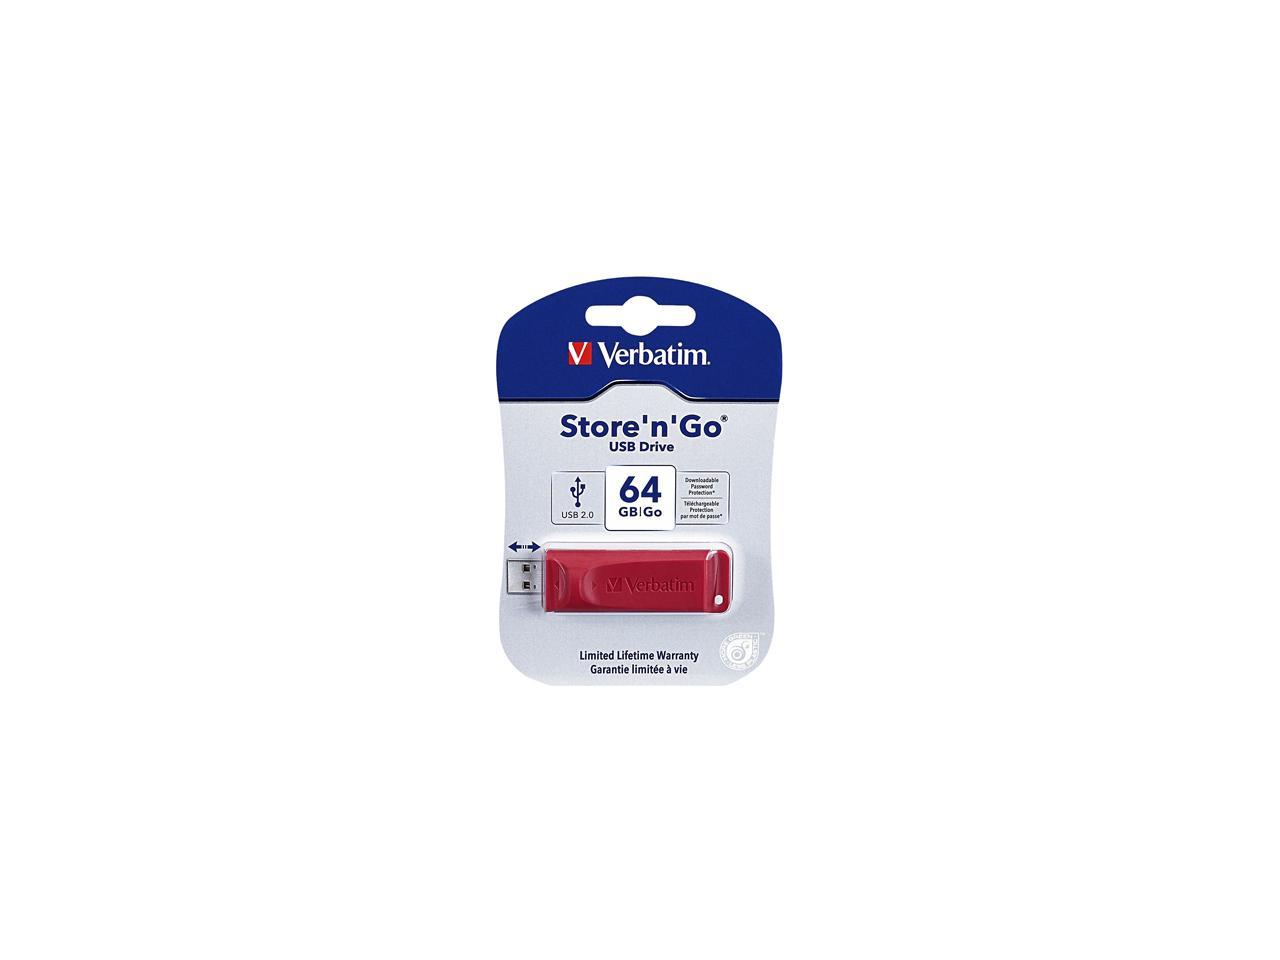 Verbatim Store 'n' Go 64GB USB Flash Drive Model 97005 - image 3 of 3